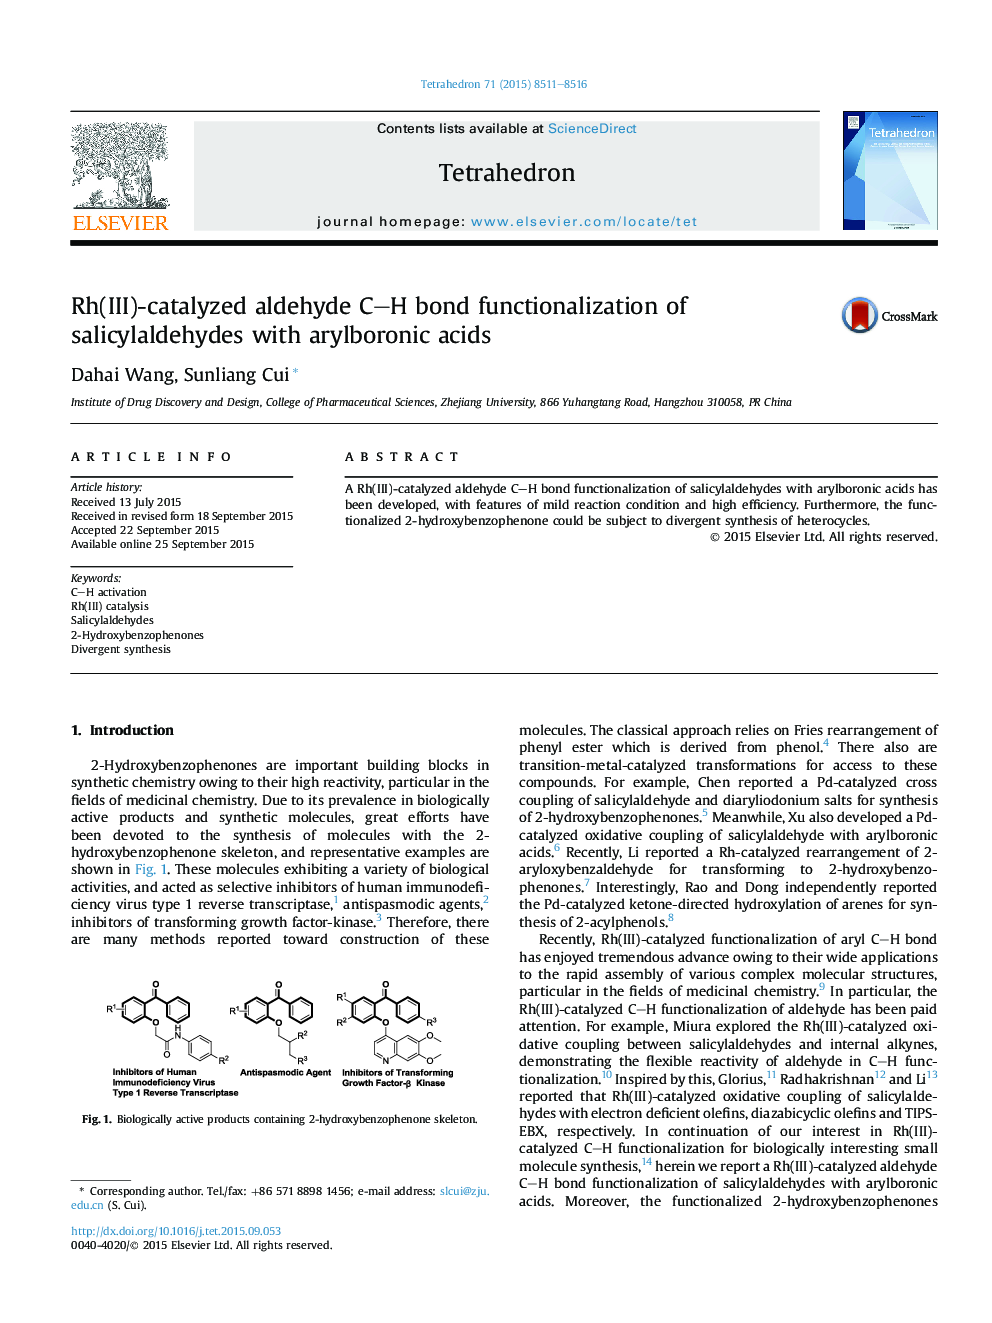 Rh(III)-catalyzed aldehyde C-H bond functionalization of salicylaldehydes with arylboronic acids